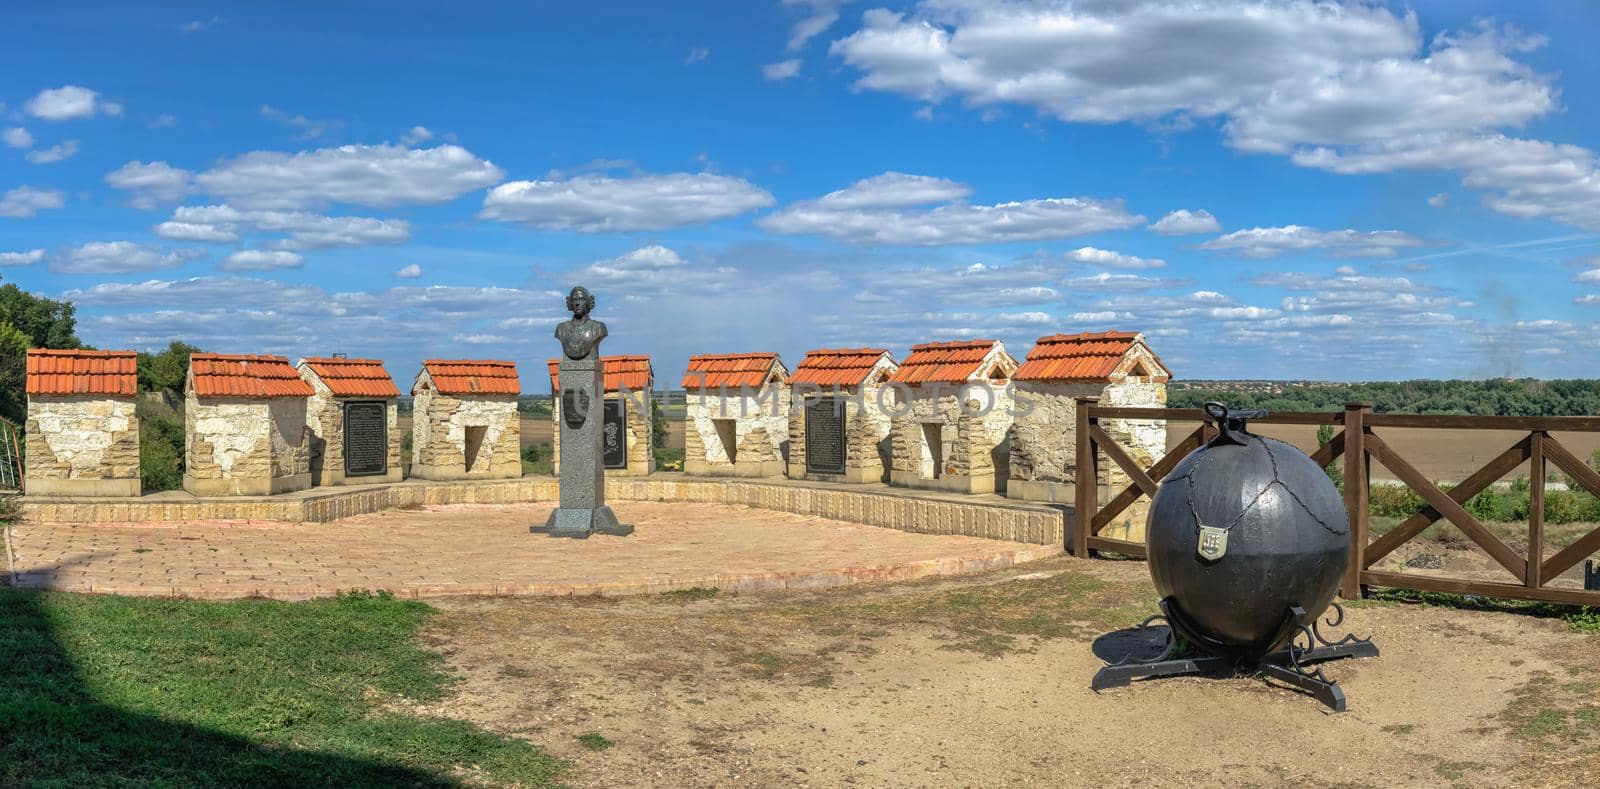 Monument to Baron Munchausen n Bender, Moldova by Multipedia